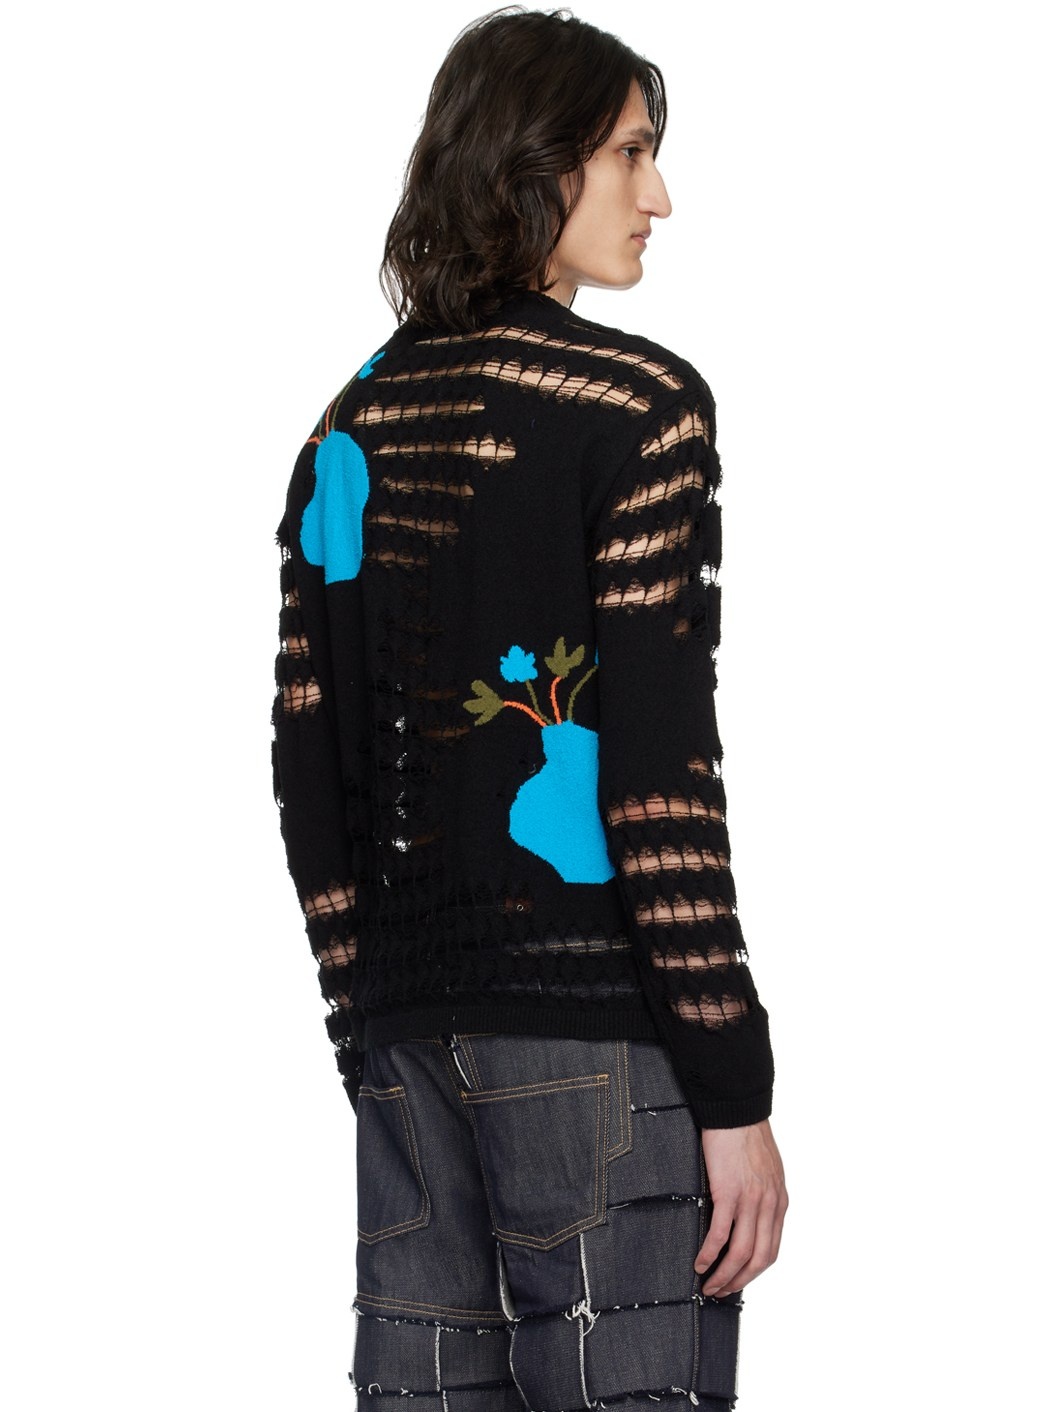 Black Flower Sweater - 3